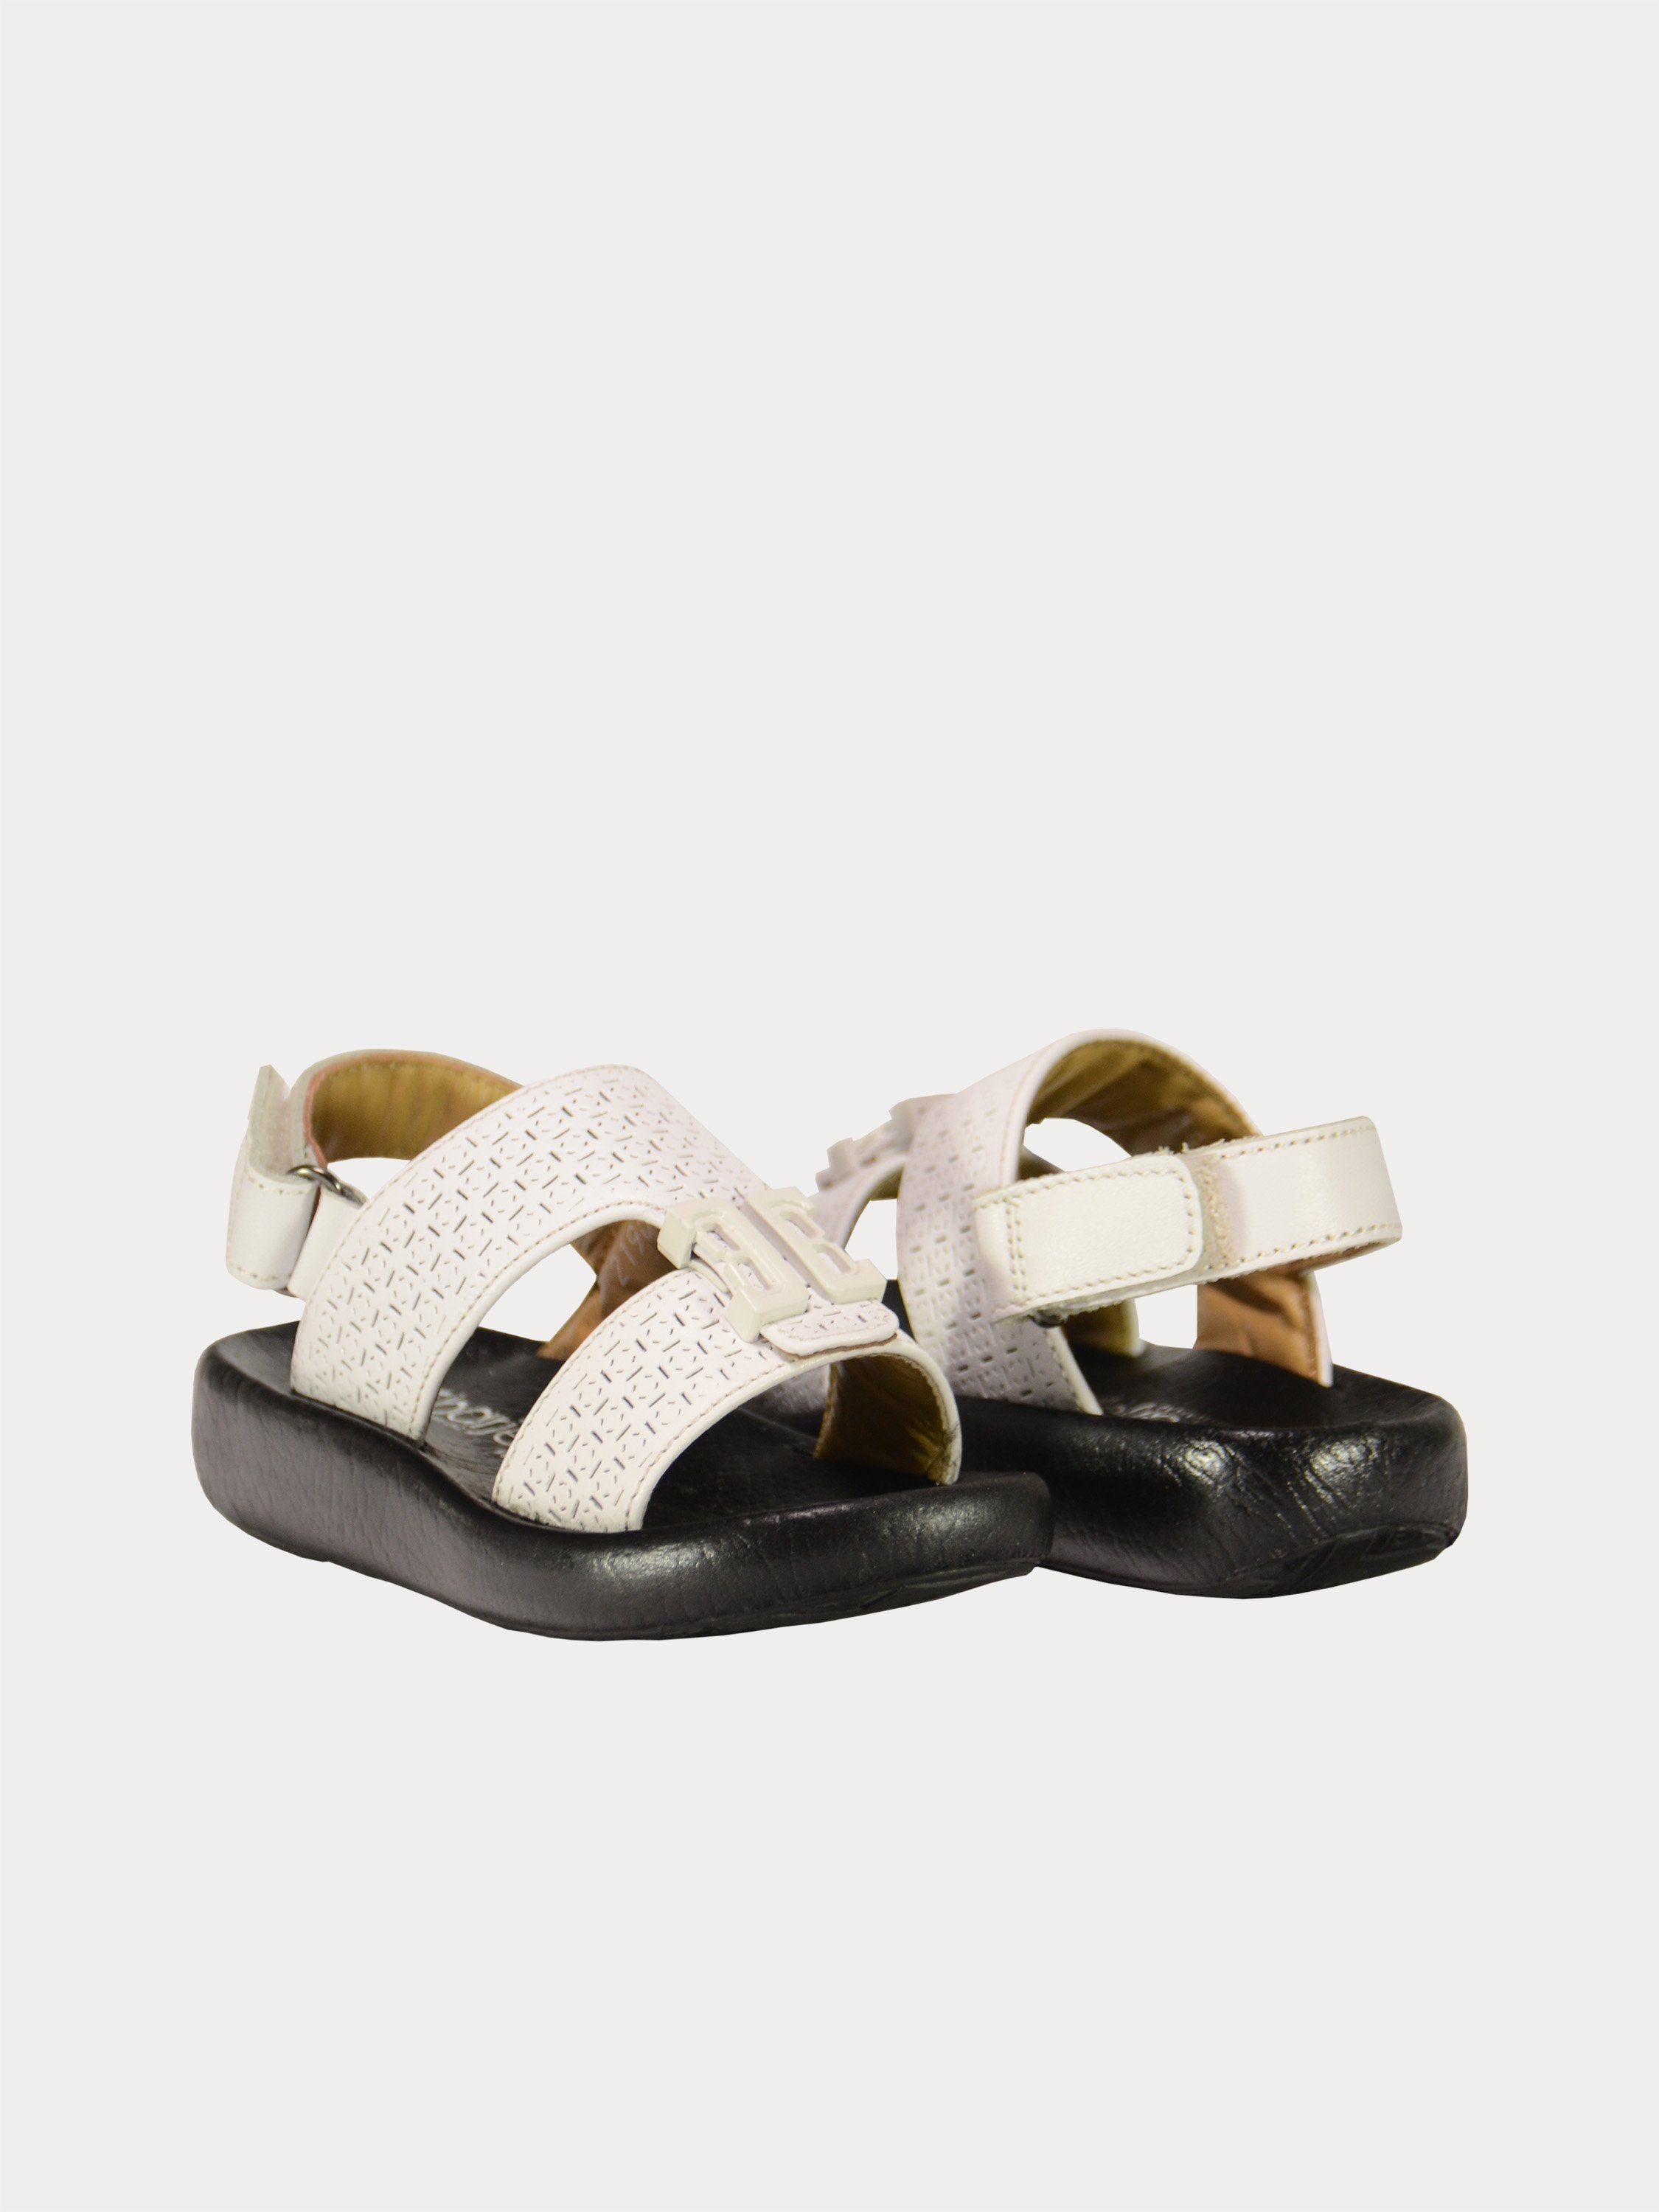 Barjeel Uno 2190940 Boys Arabic Sandals #color_White